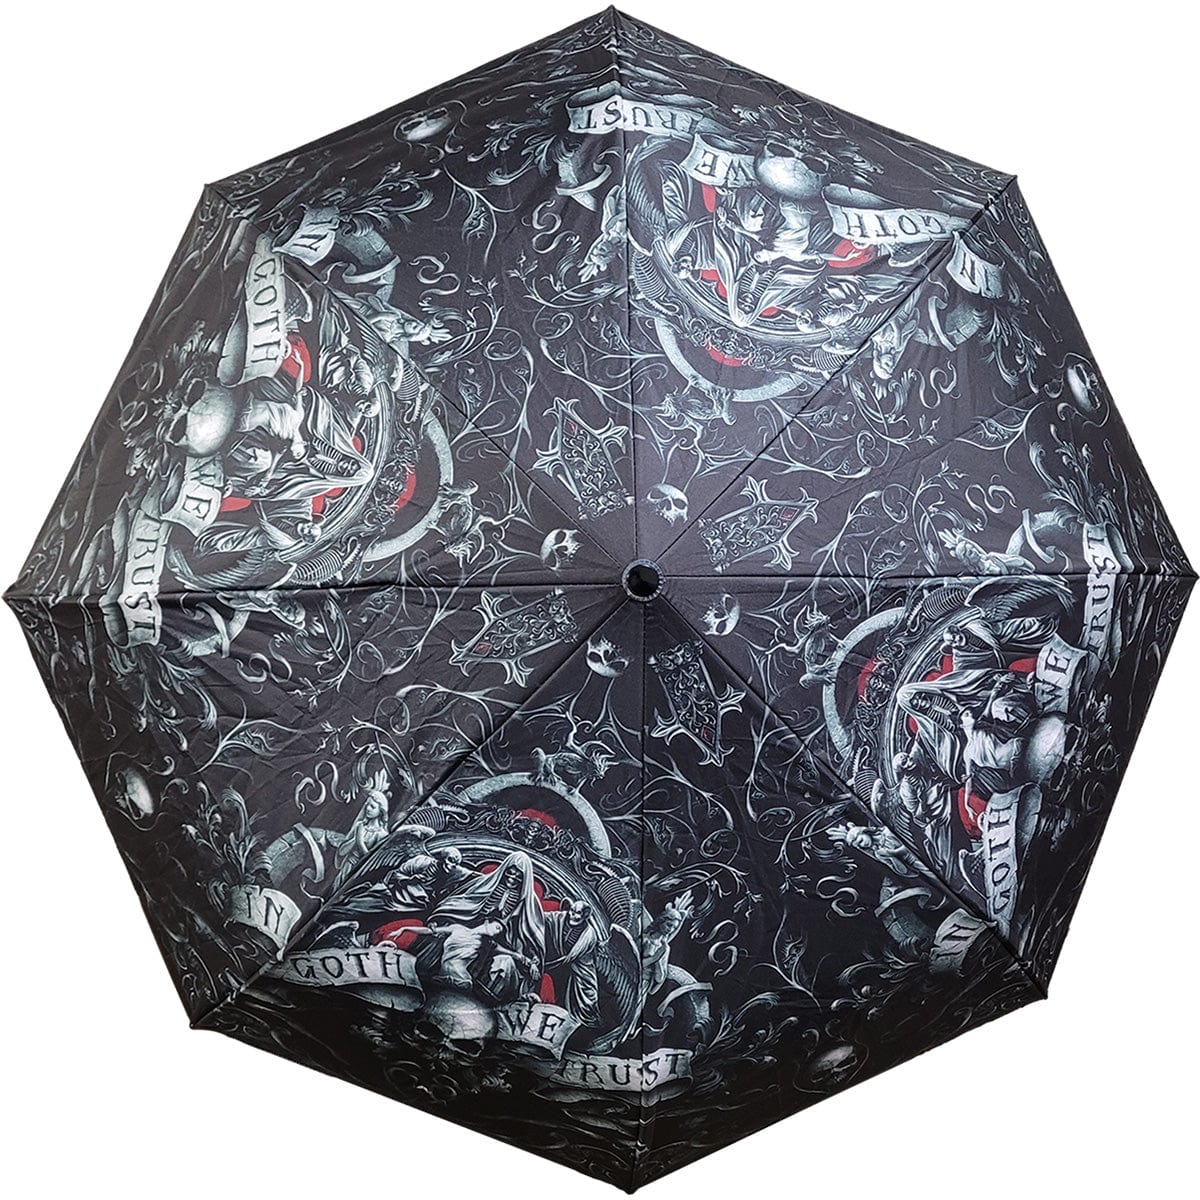 IN GOTH WE TRUST - Compact Travel Umbrella with Auto Open & Close